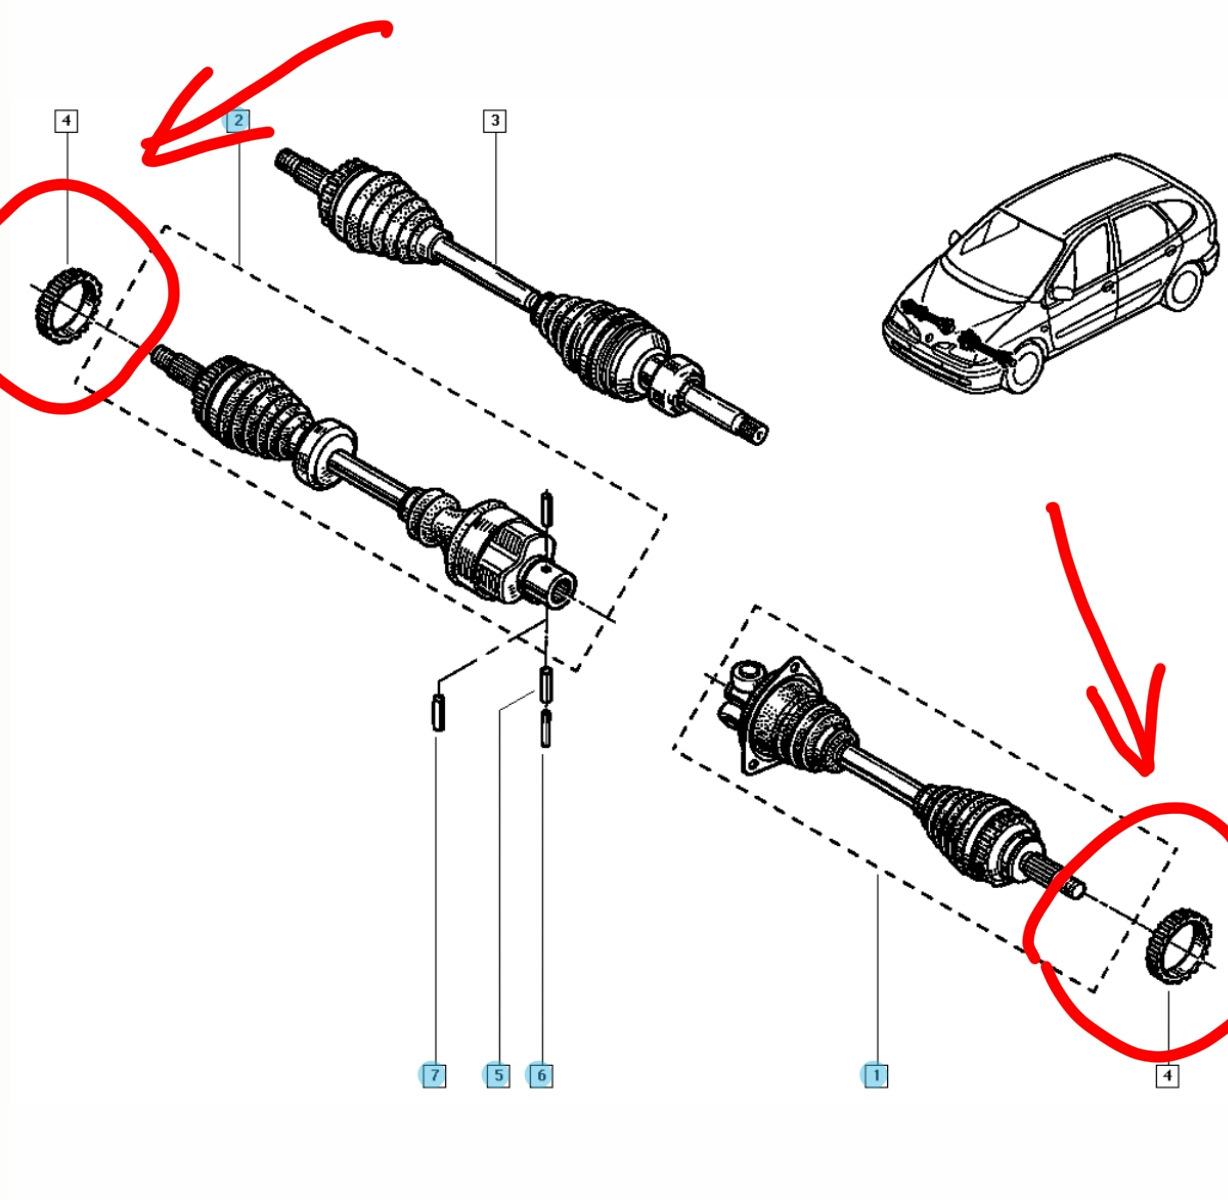 Абс задний привод. Рено Сценик 2 привод левый. Схема коробки передач Рено Дастер 4х4. Схема переднего привода Рено Дастер. Рено Меган 2 схема приводов КПП.